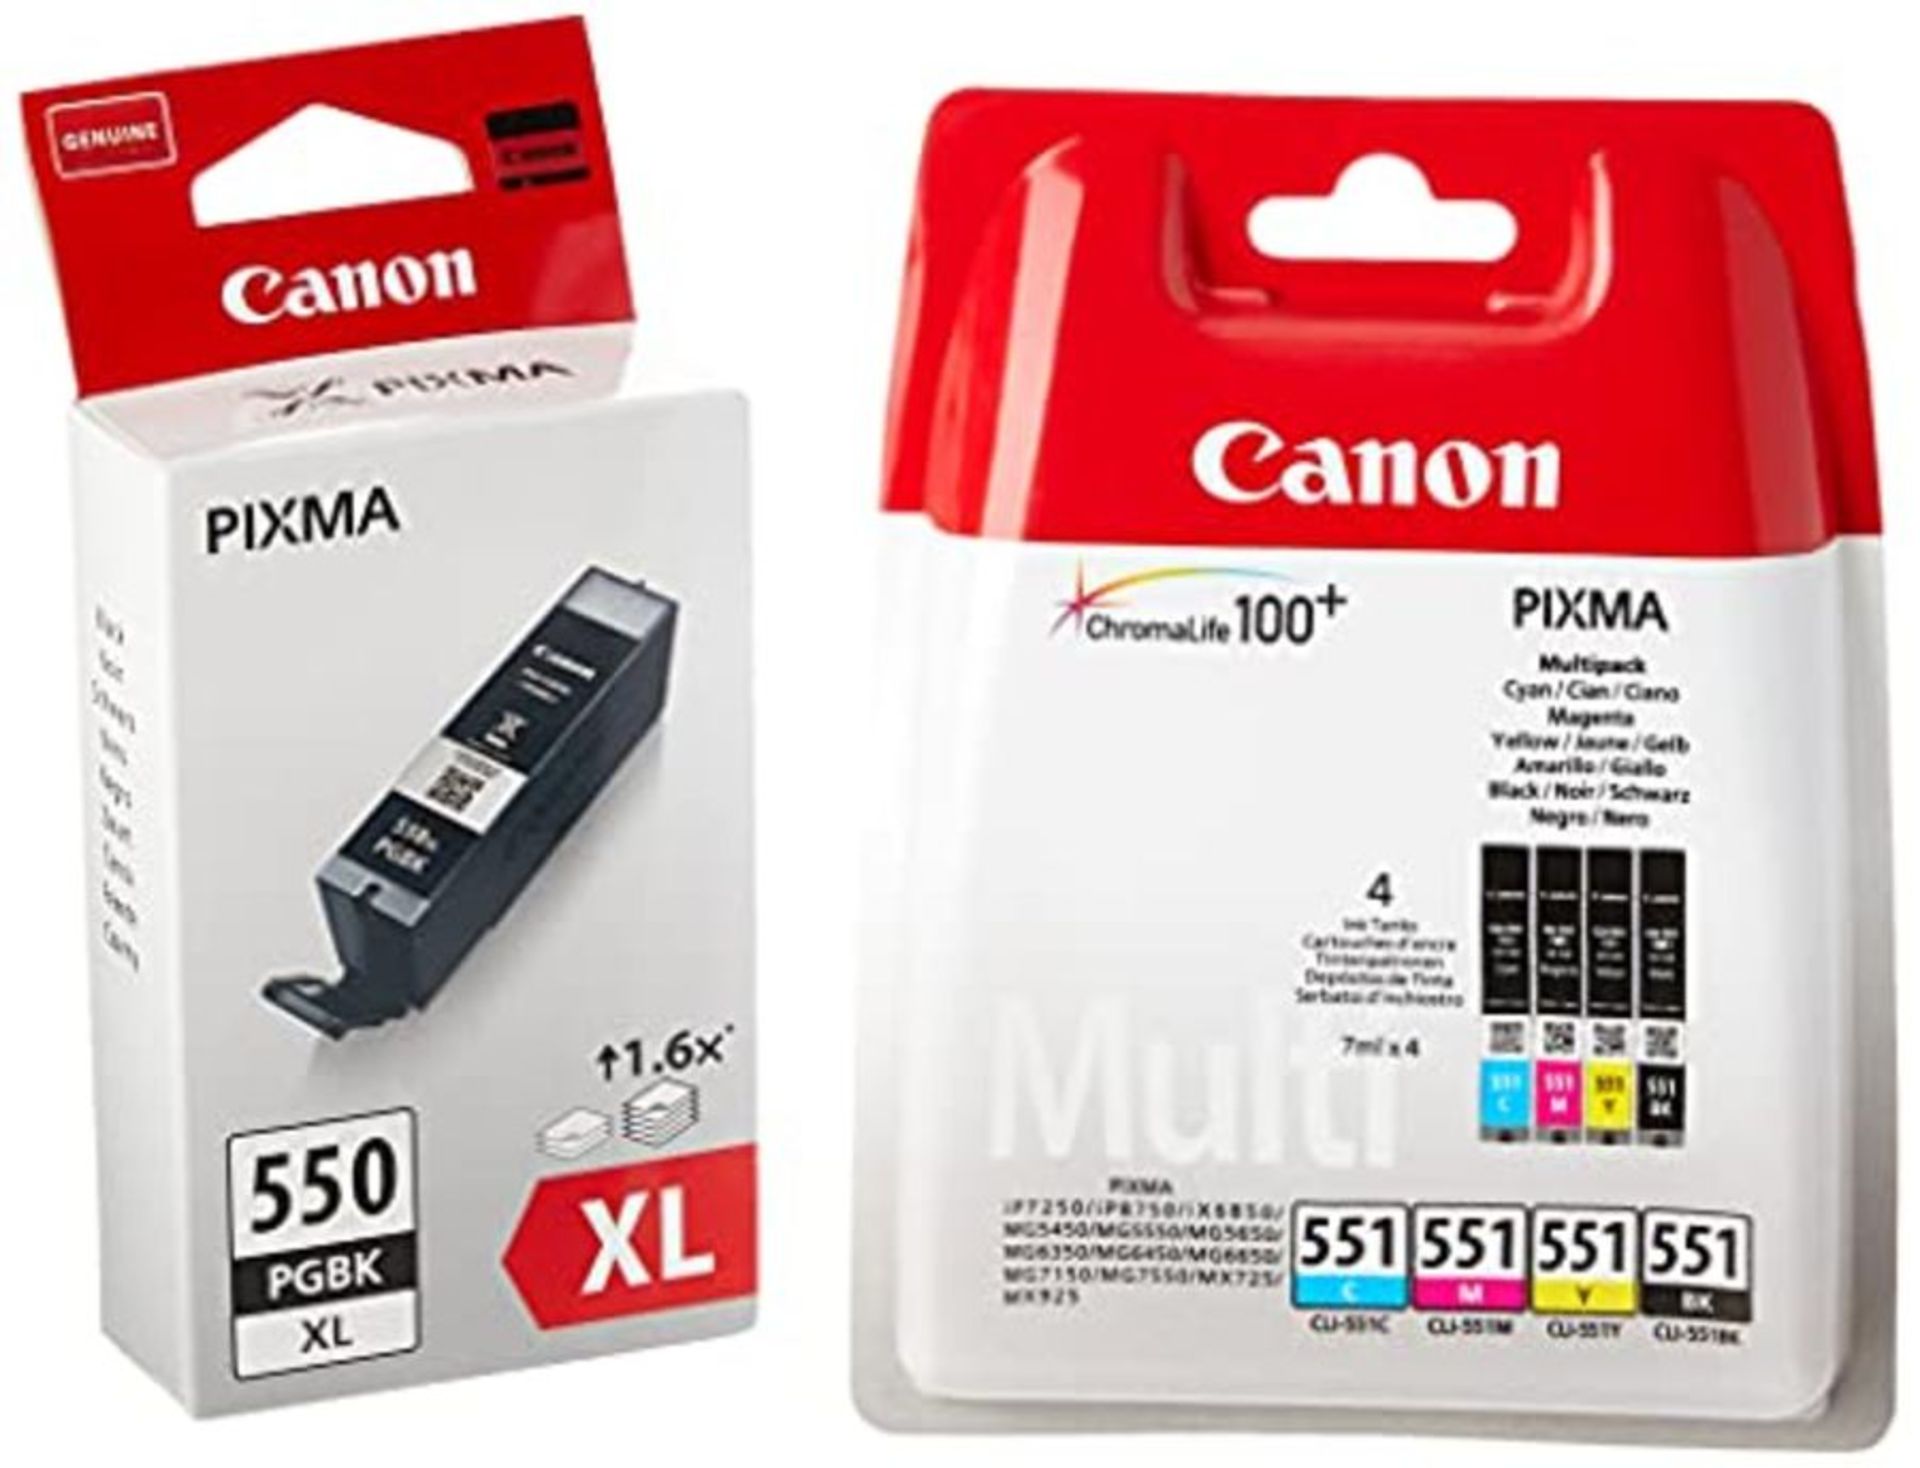 RRP £53.00 CANON Ink Cartridge Canon PGI Pack 550XL Black + CLI 551 4 colors (Cyan/Yellow/Black/M